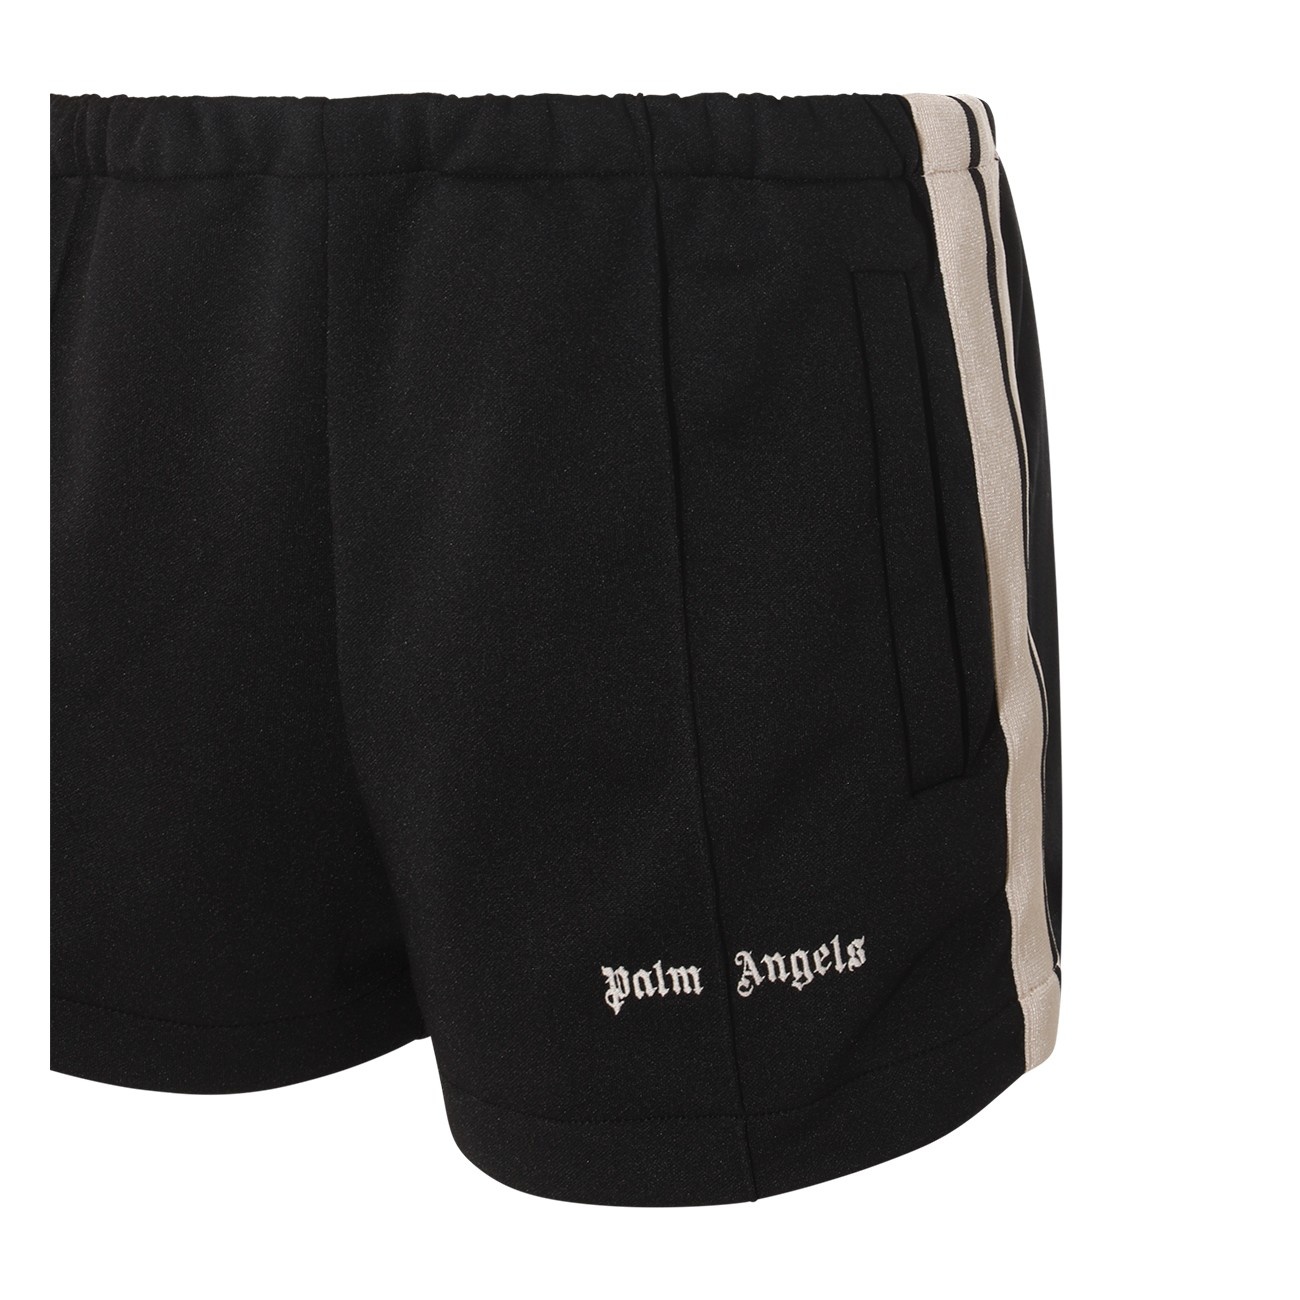 black shorts - 3